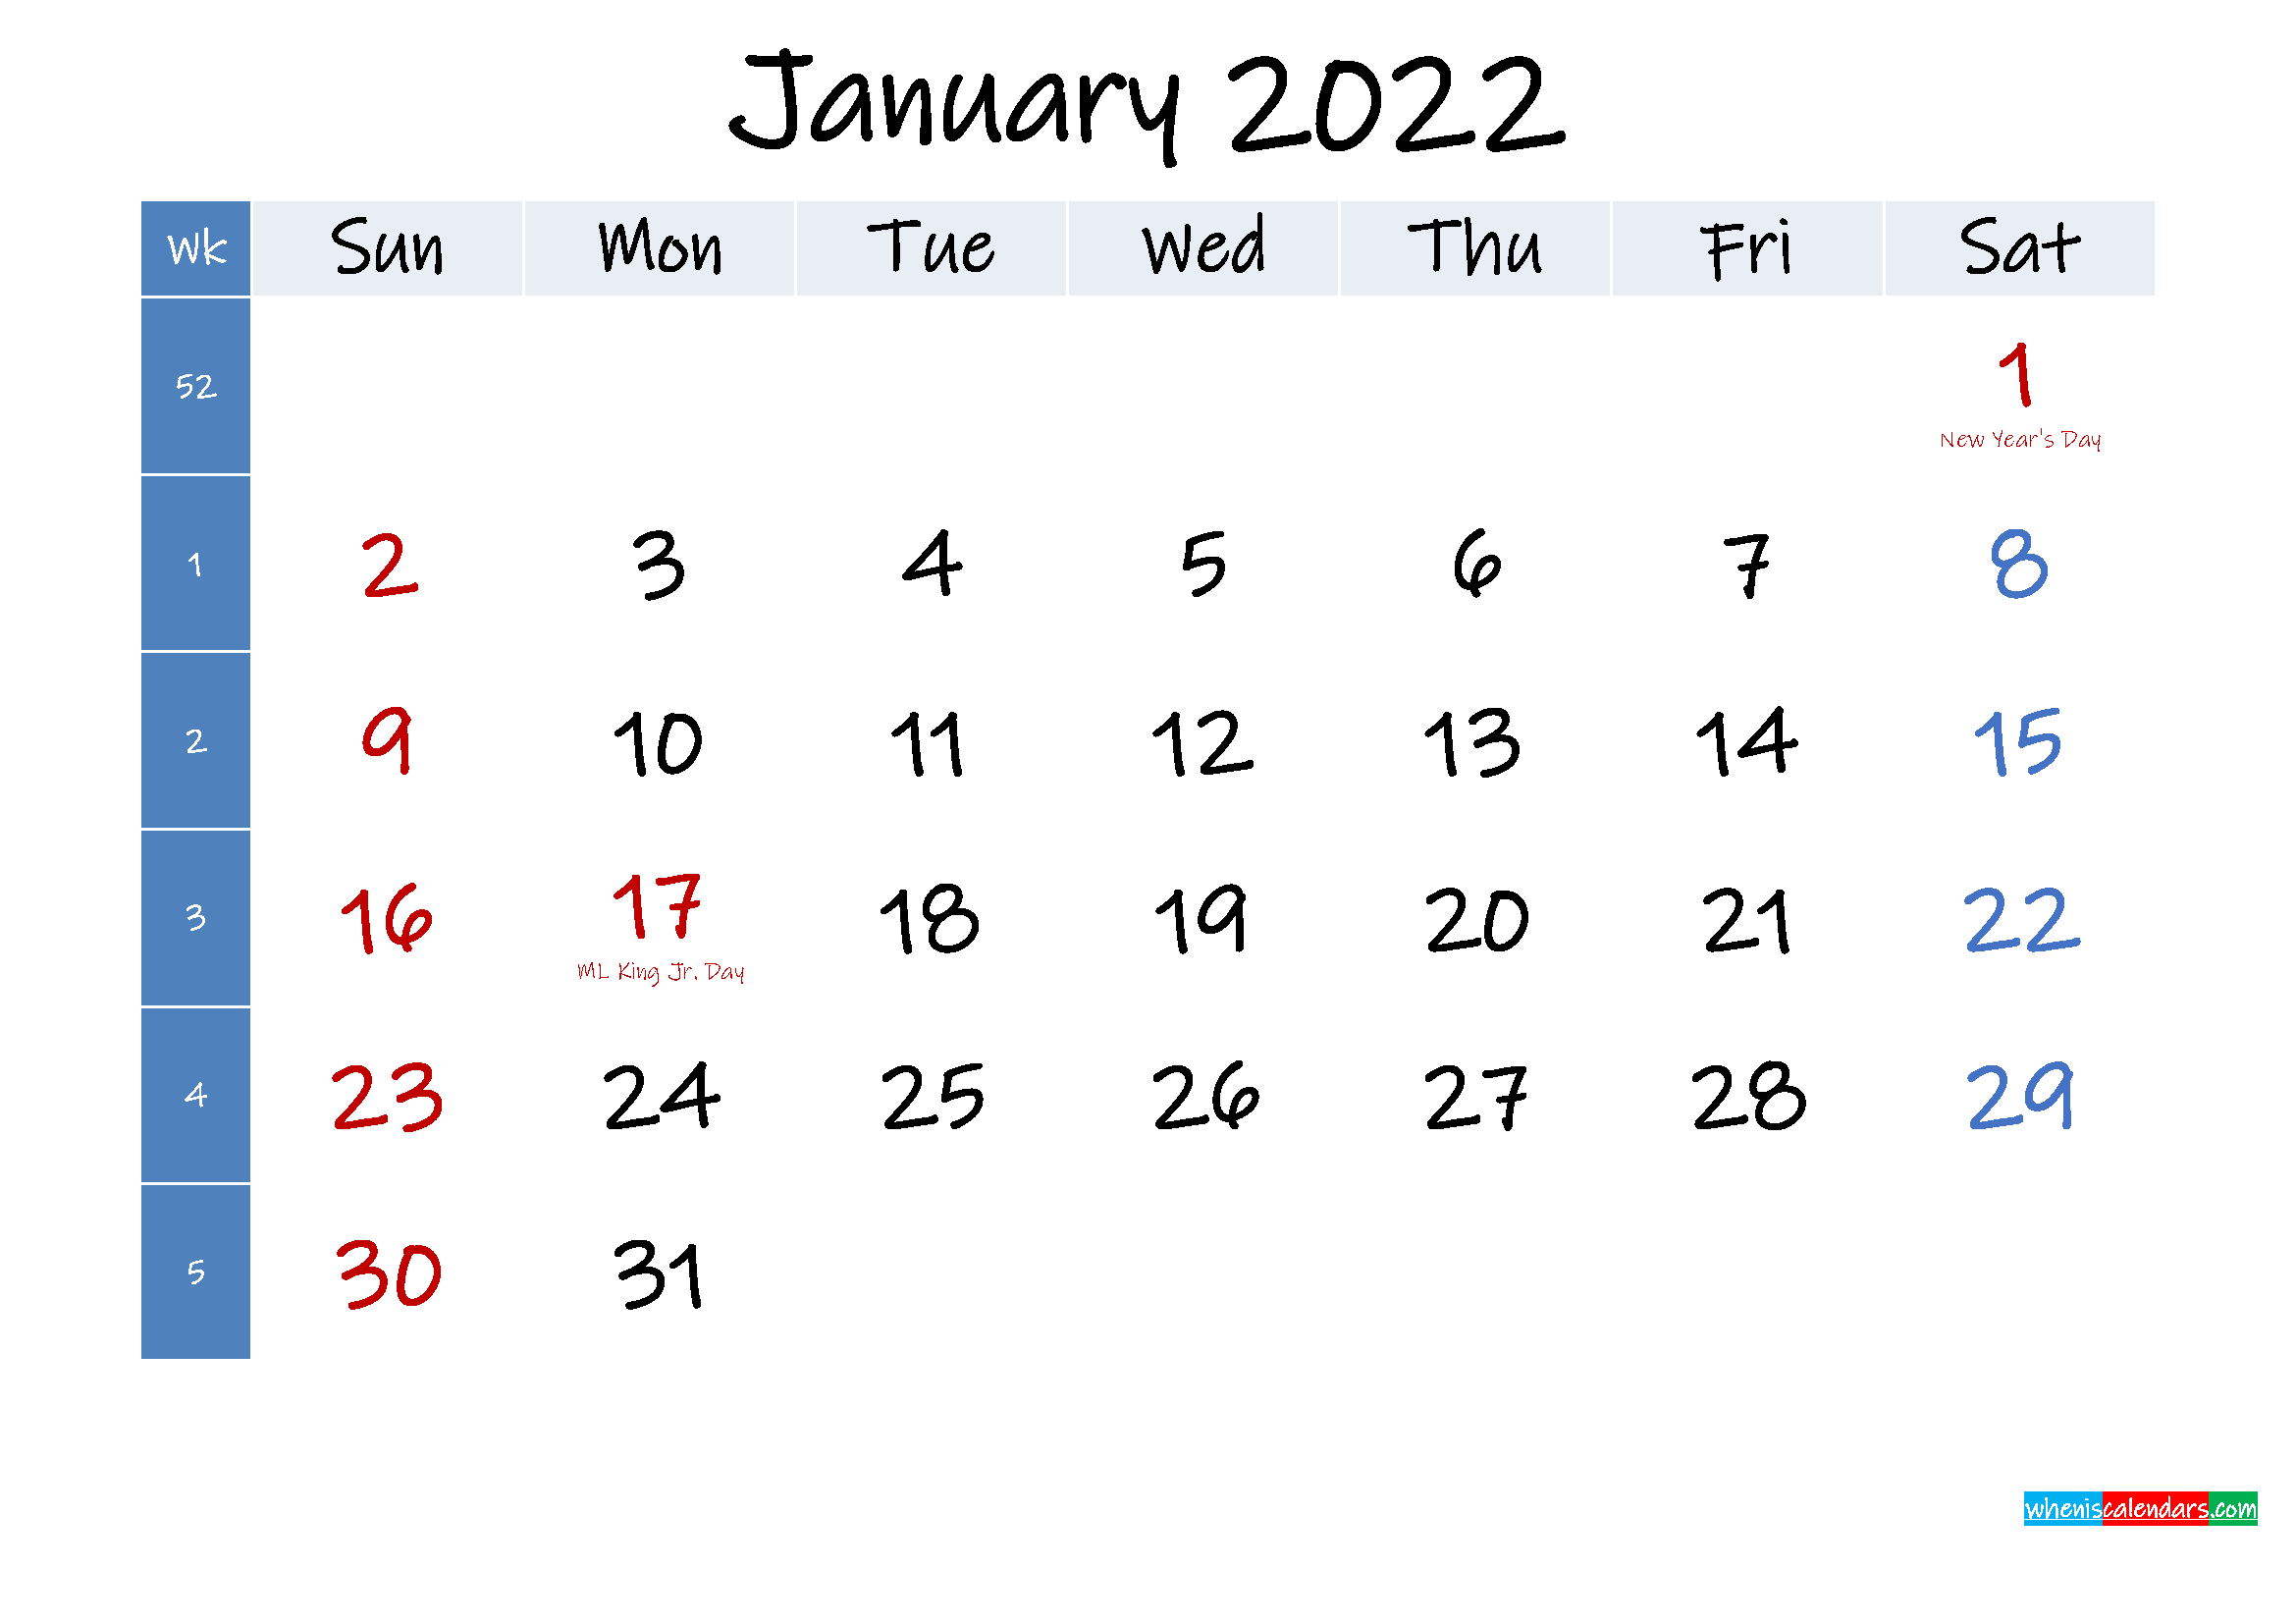 Catch Calendar 2022 January Month